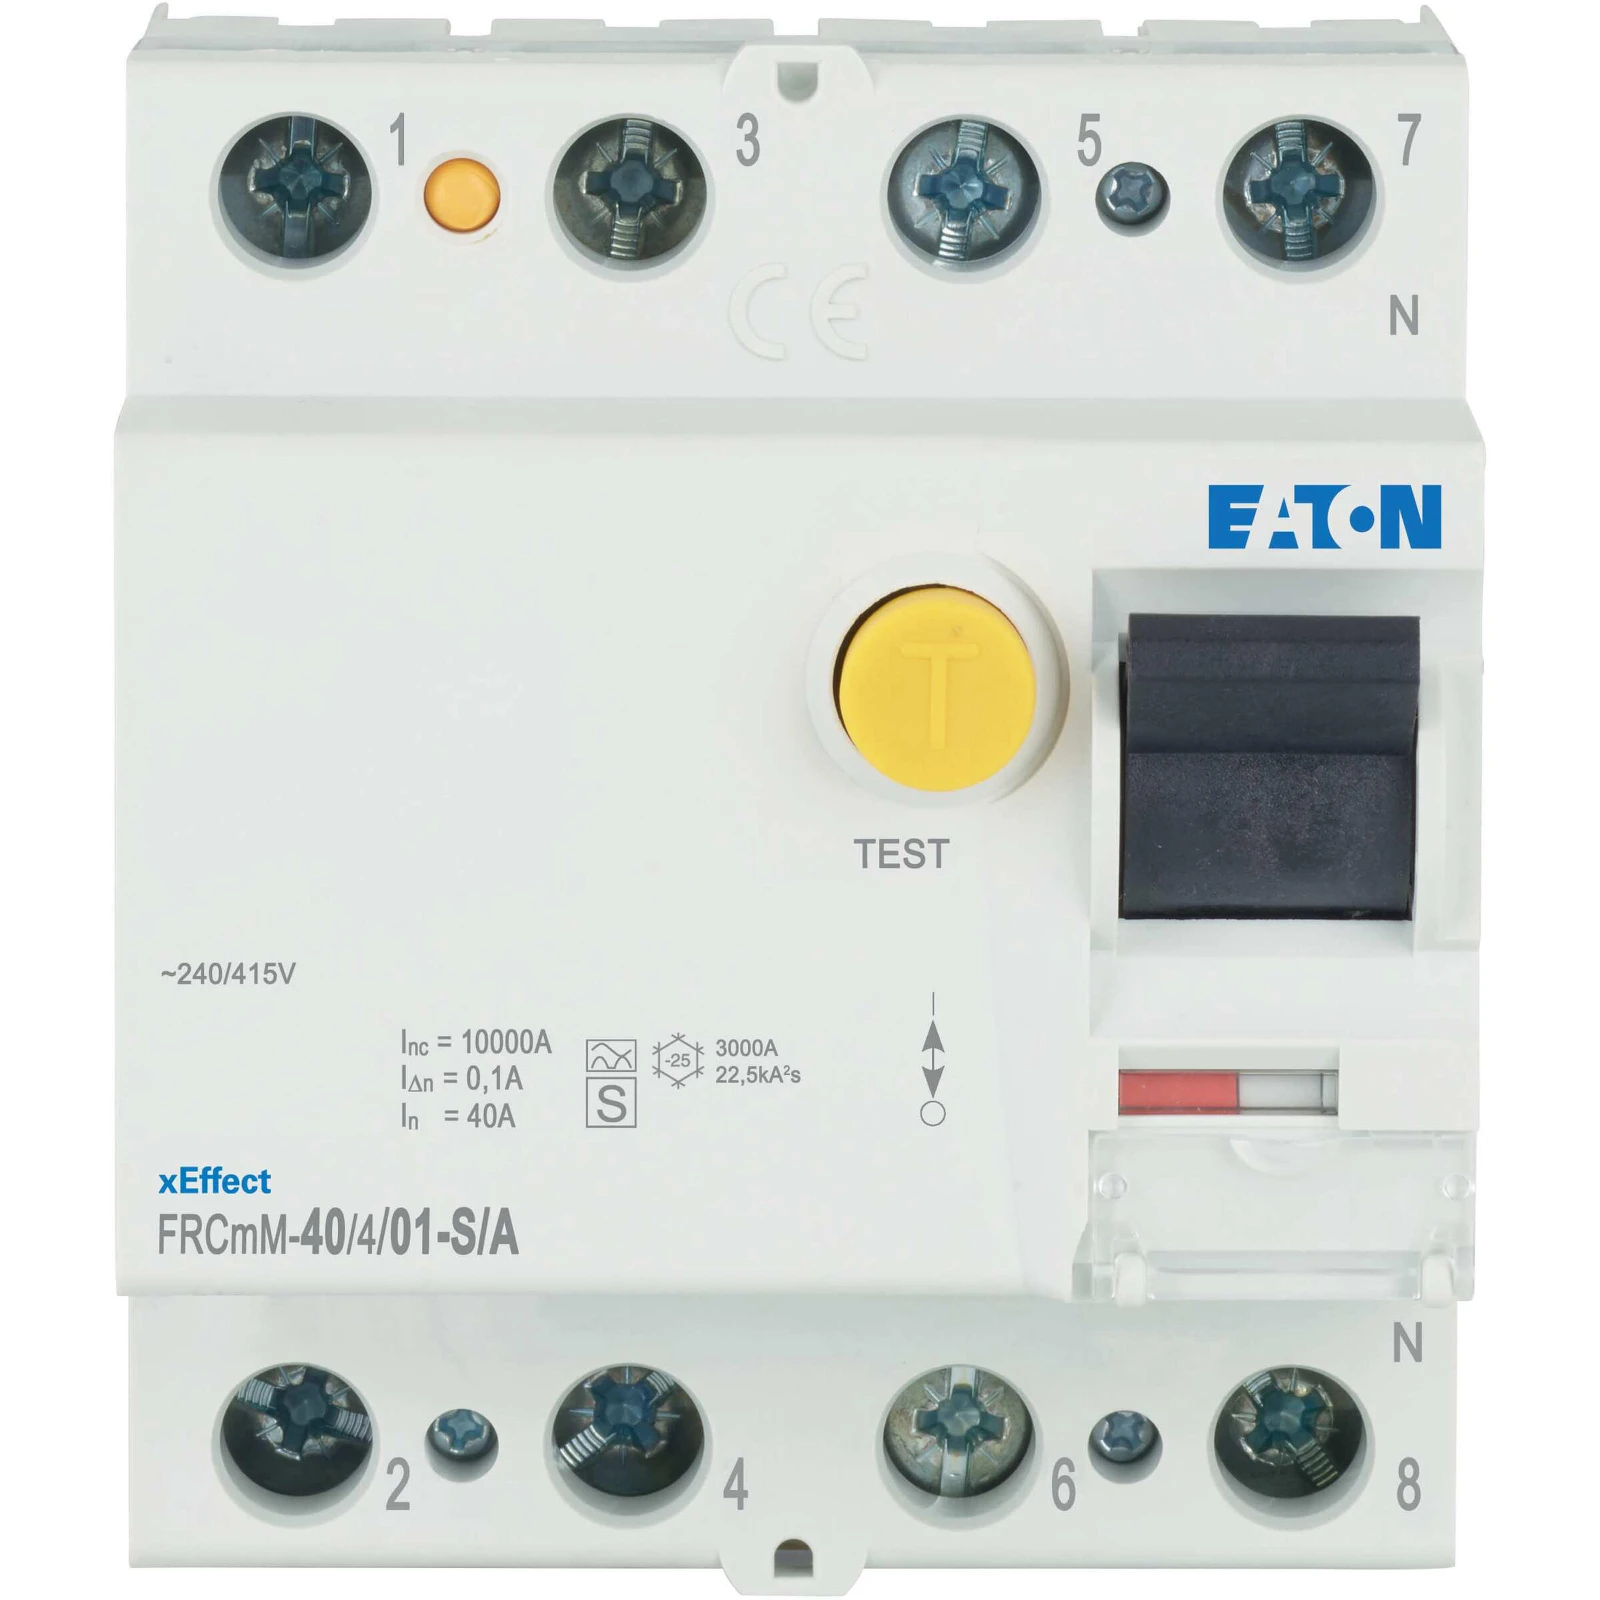 2537241 - Eaton FRCMM-40/4/01-S/A